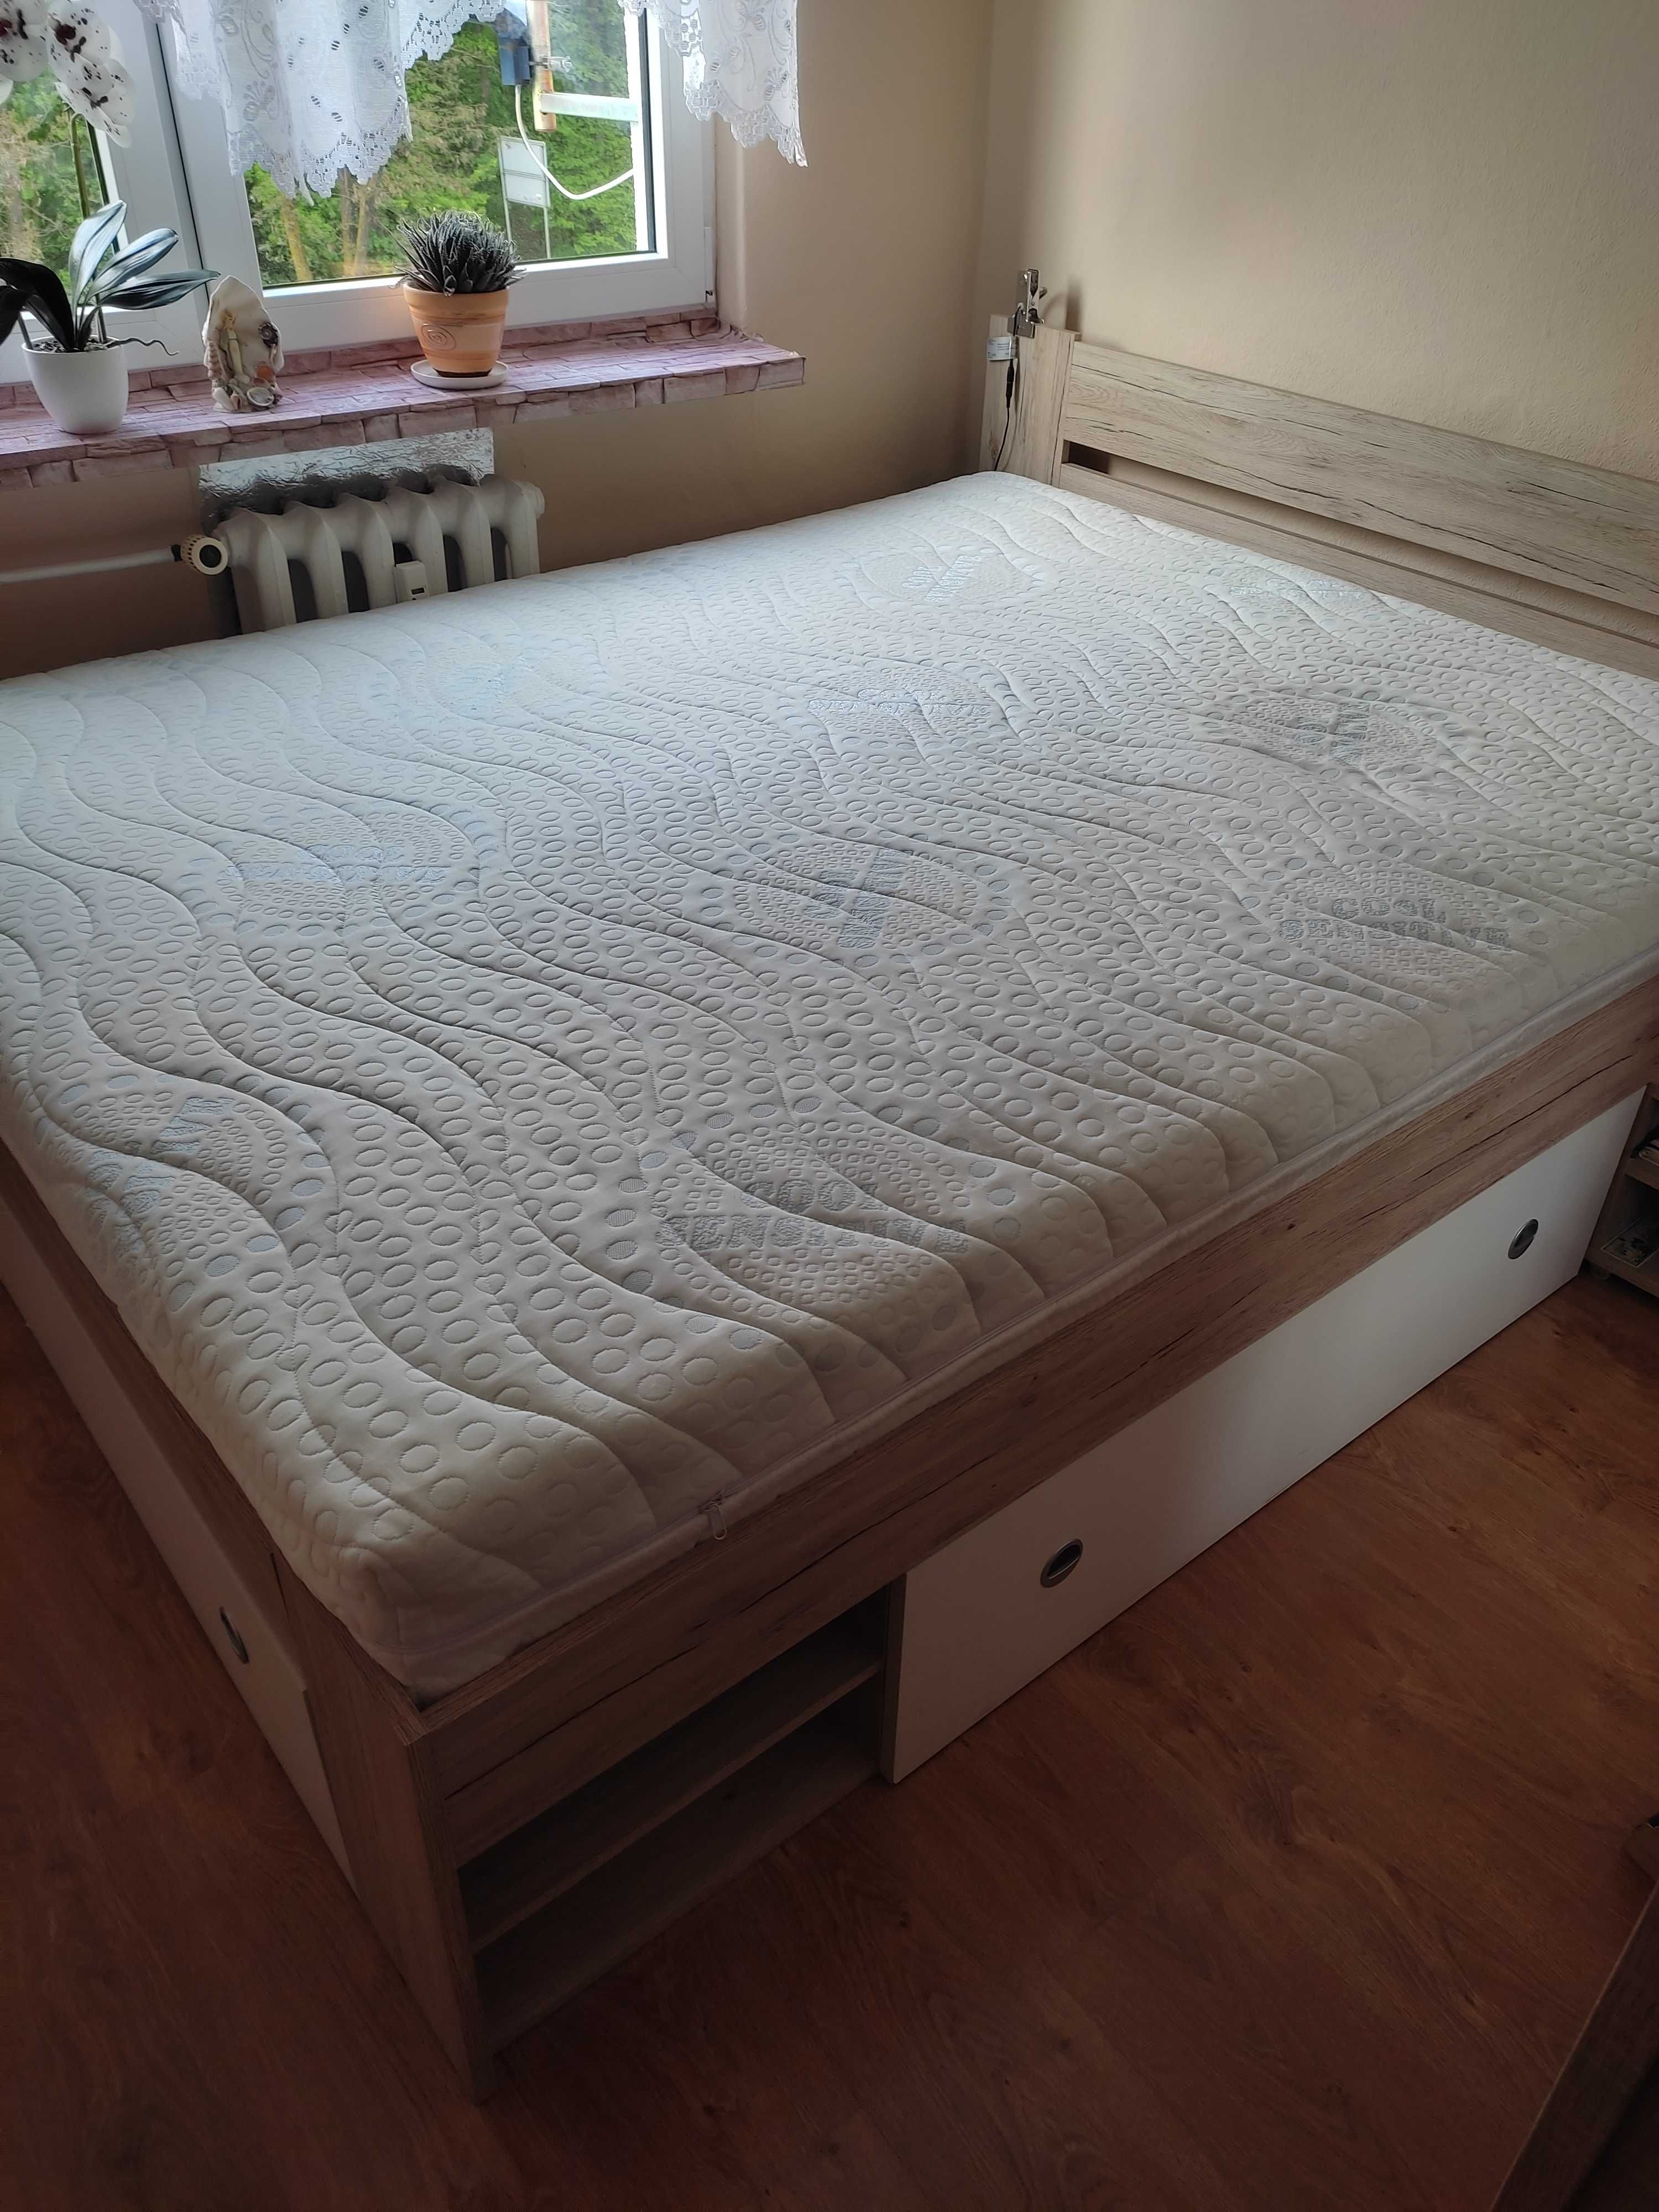 Łóżko Stefan 160x200 ze stelażem i materacem, zestaw łóżko materac